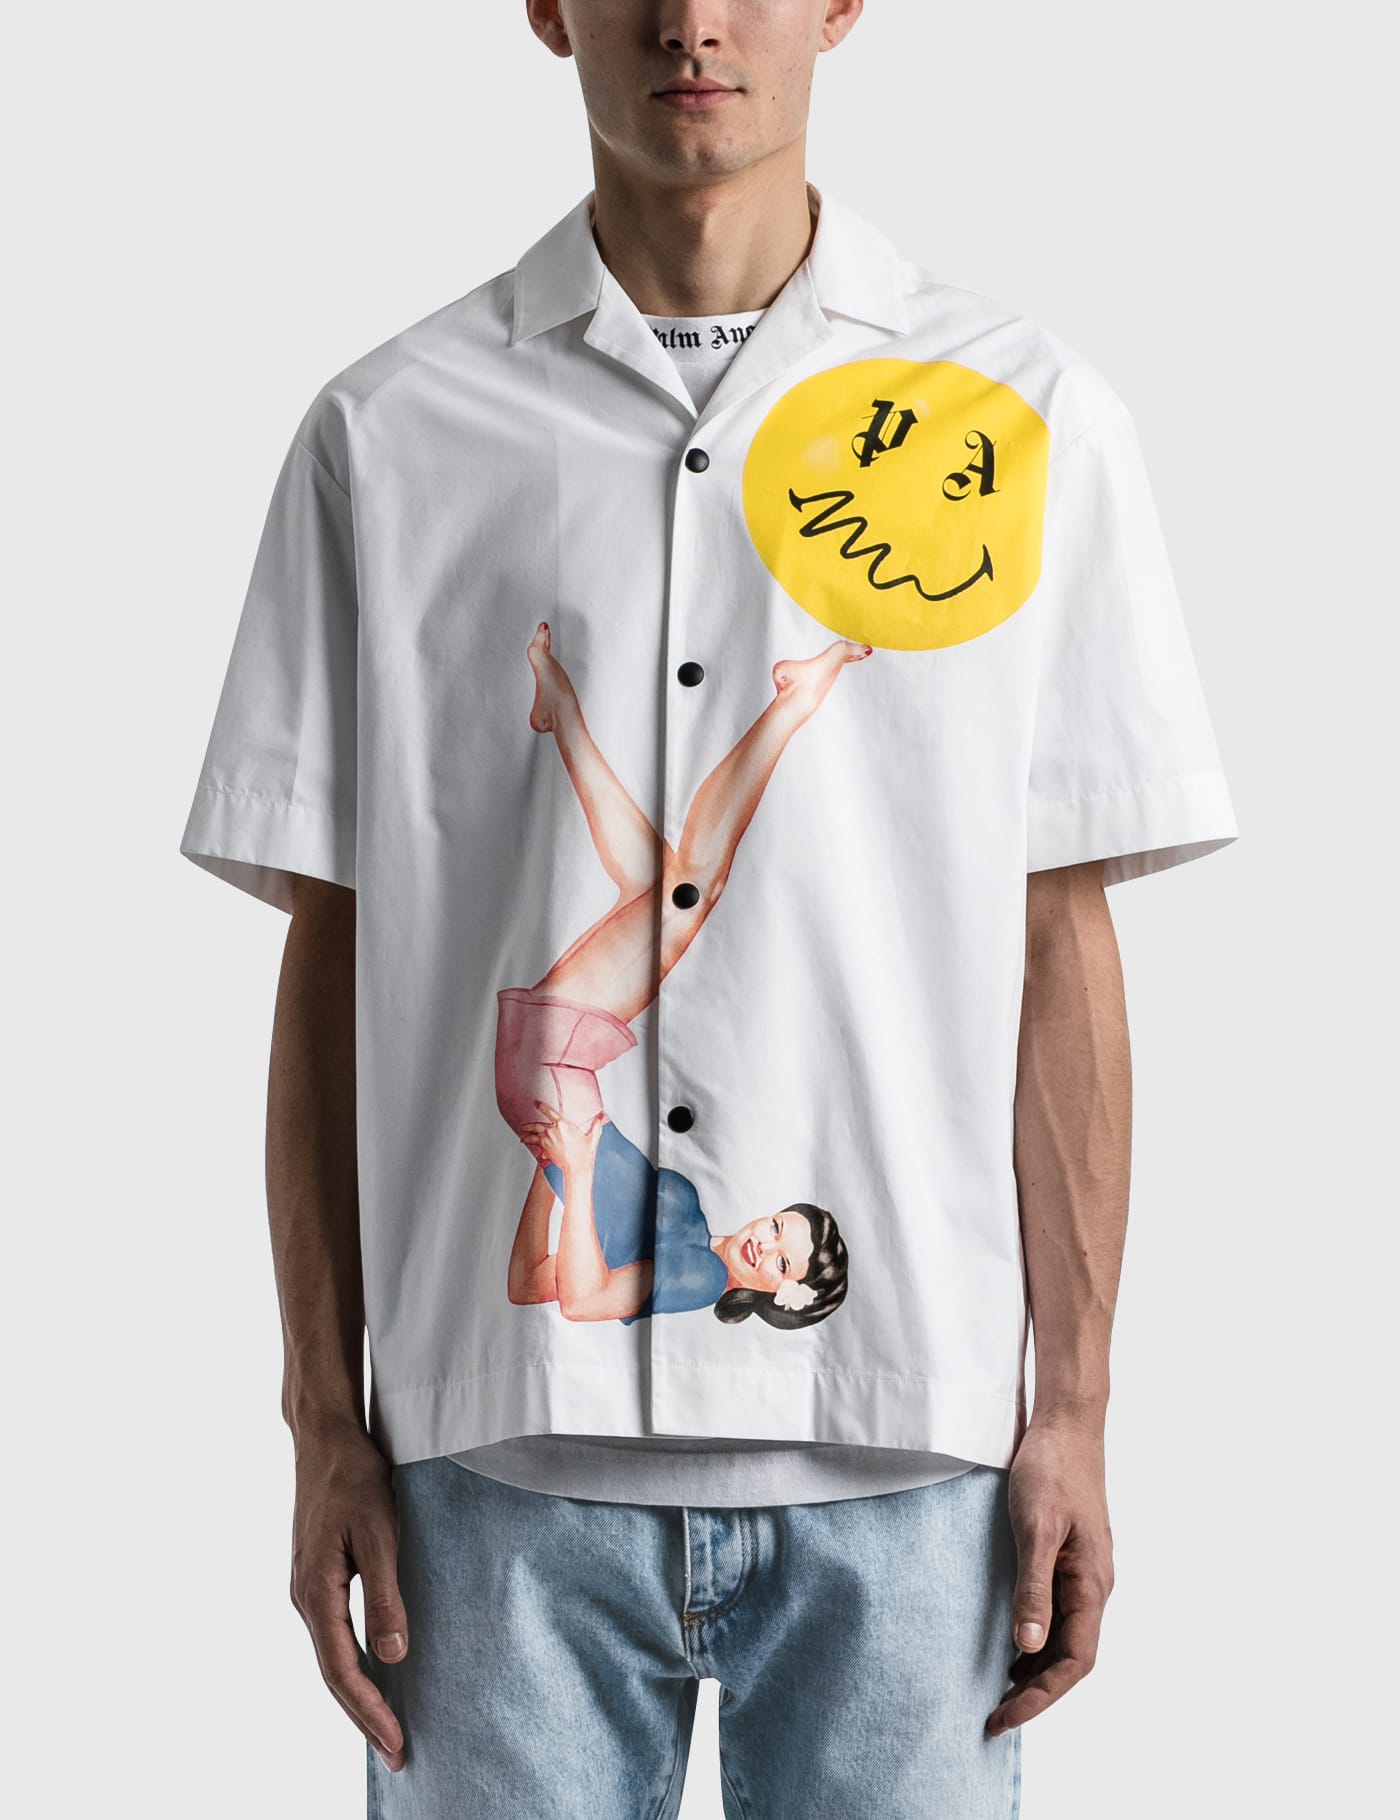 Palm Angels - Juggler Pin Up Bowling Shirt | HBX - Globally 